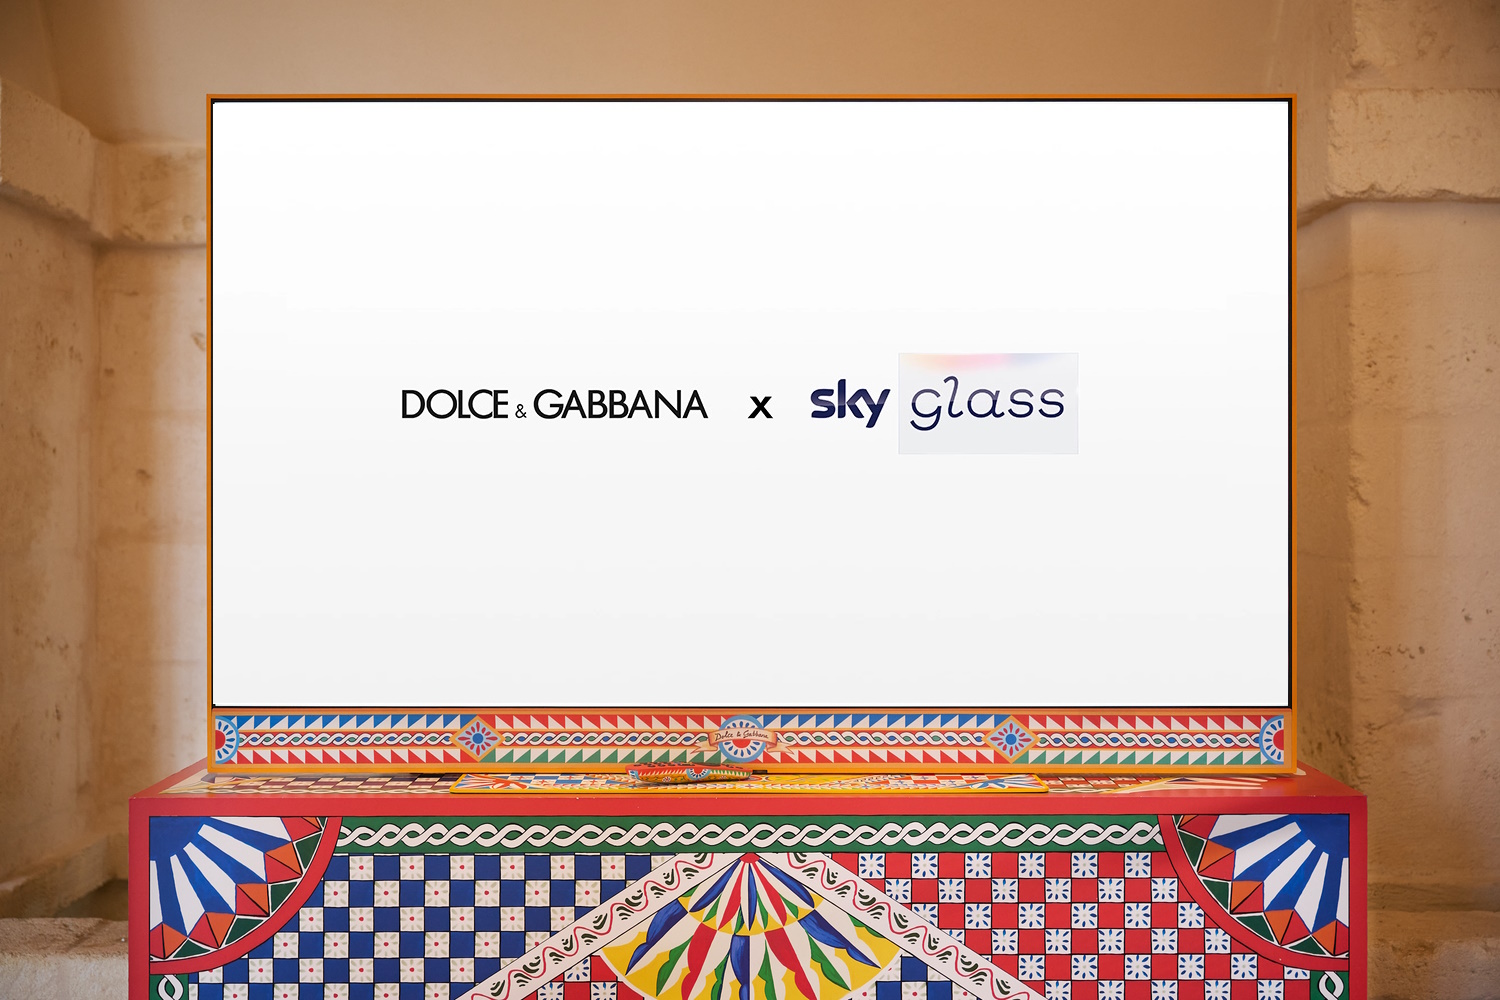 Dolce&Gabbana e Sky: al via la partnership tra i due brand